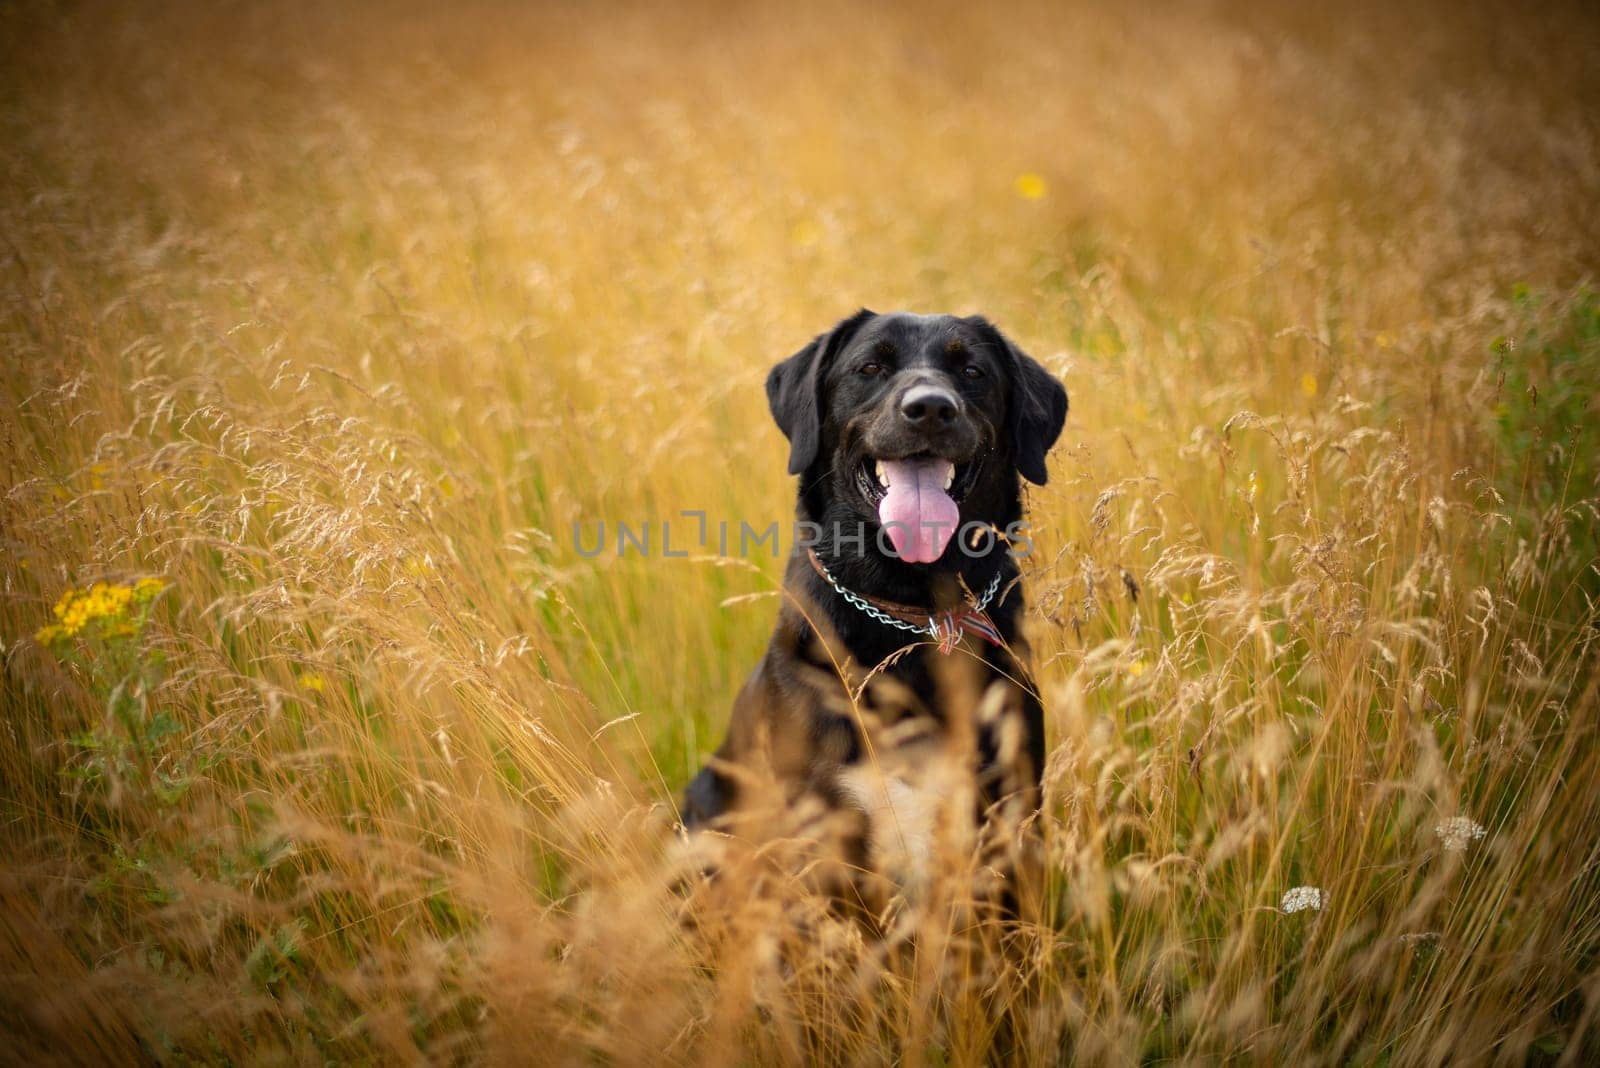 Black Labrador Sitting in a Golden Field of Tall Grass by JavierdelCanto